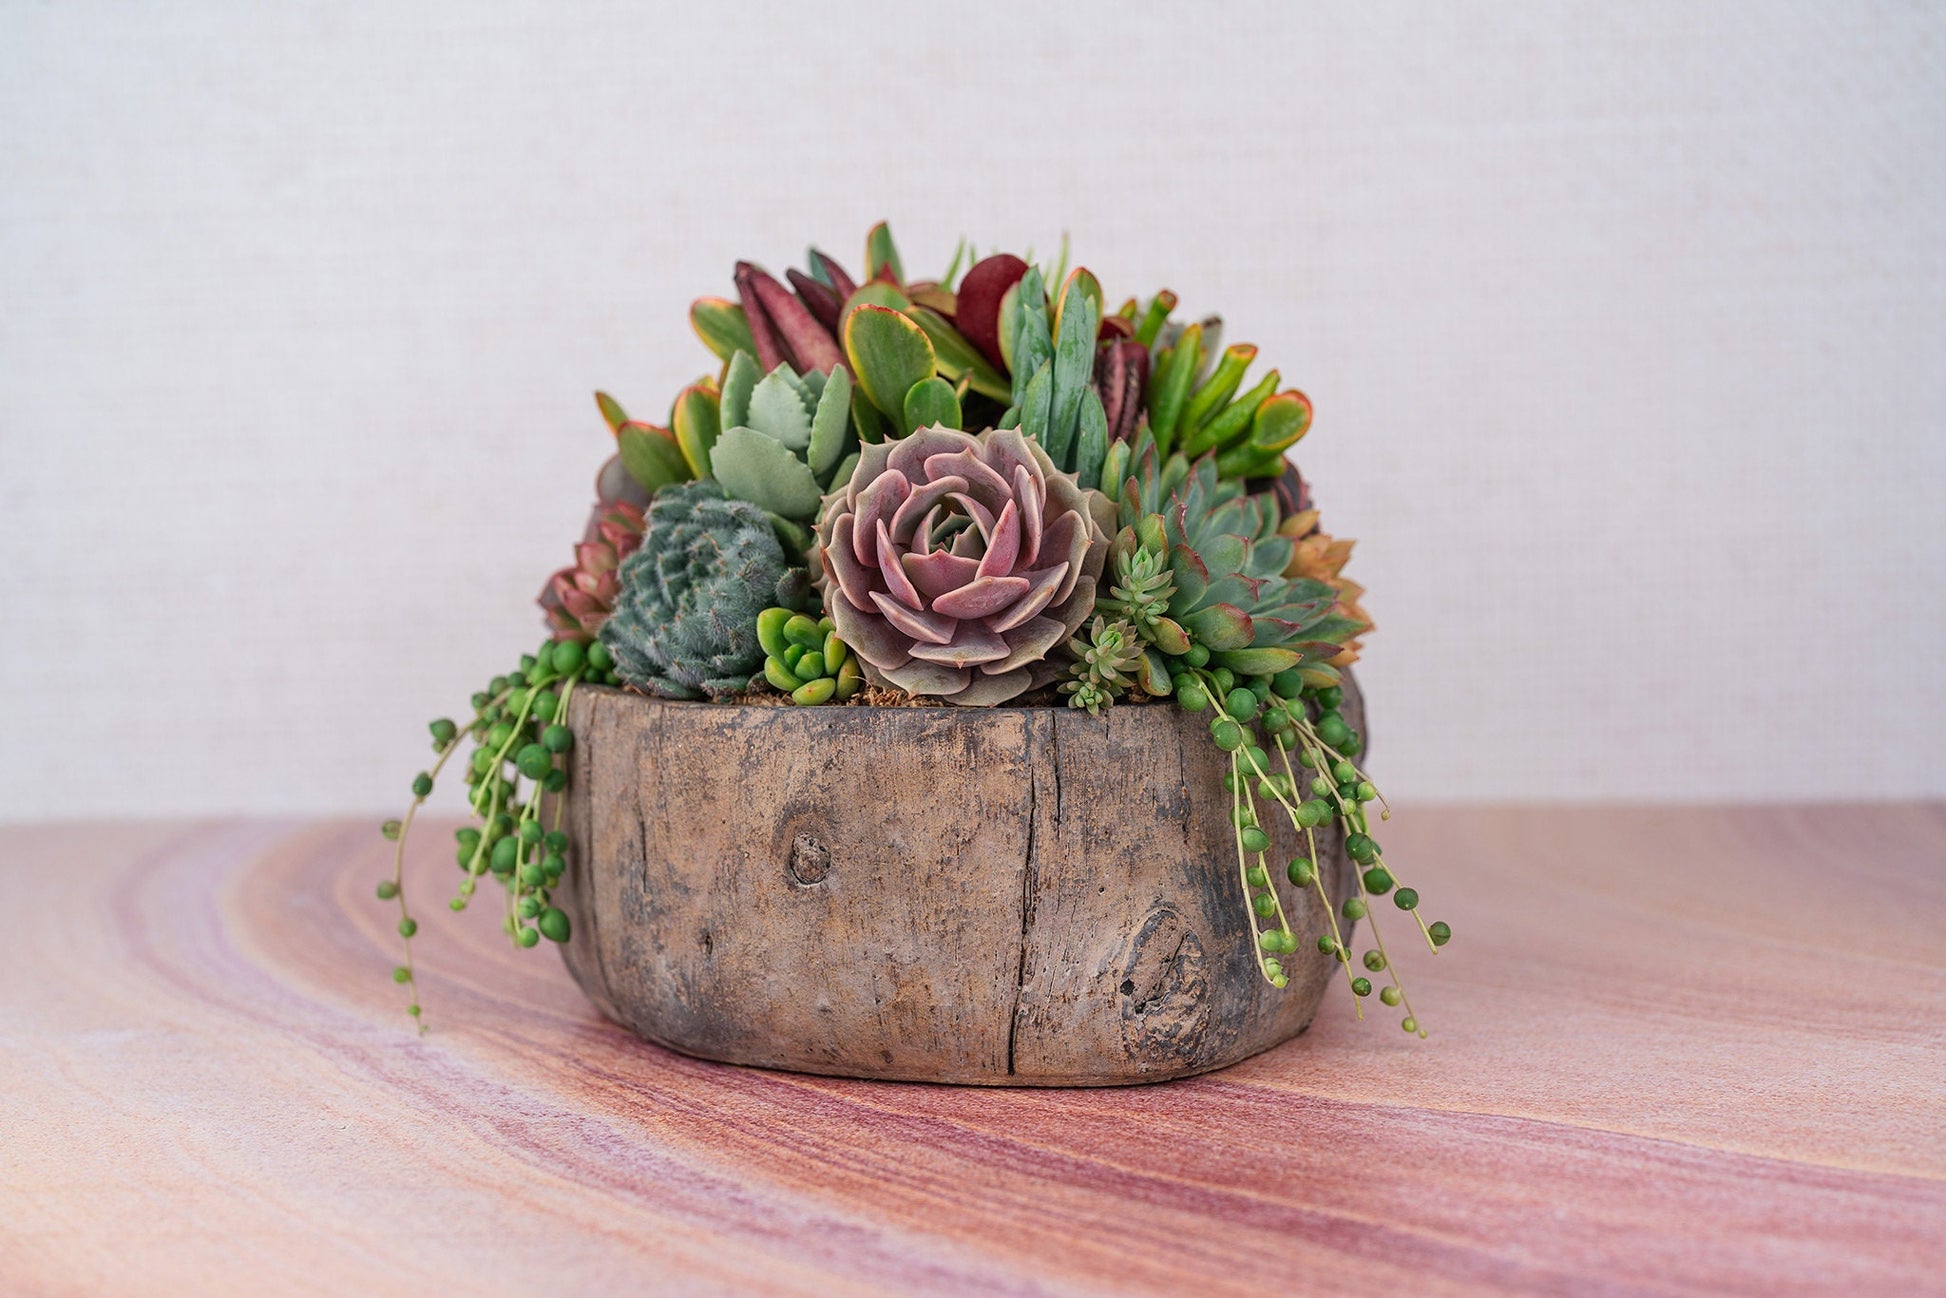 Tree Trunk Cement Bowl Succulent Arrangement Planter: Living Succulent Gift, Centerpiece for Weddings & Events, Housewarming Gift